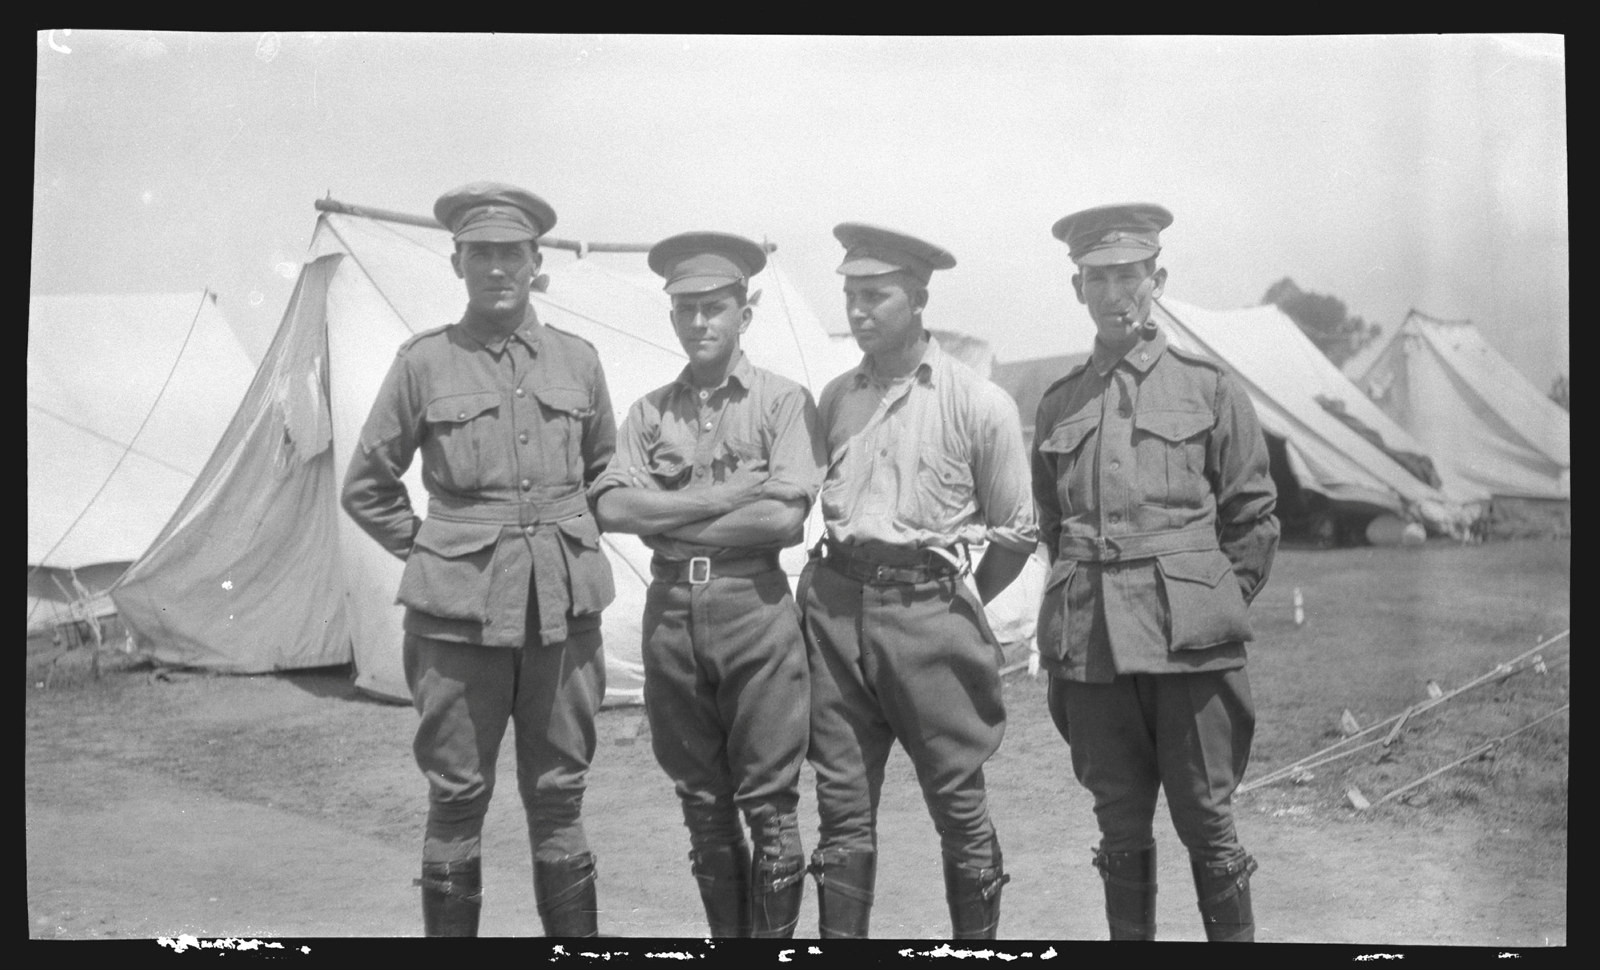 Members of the 1st AIF Mining Corps at Holsworthy training camp, February 1916. Left to right: Sapper Bill Goode, Sapper Bob Barnet, Corporal Oswald Ochs, Sapper Edgar Hicks. 